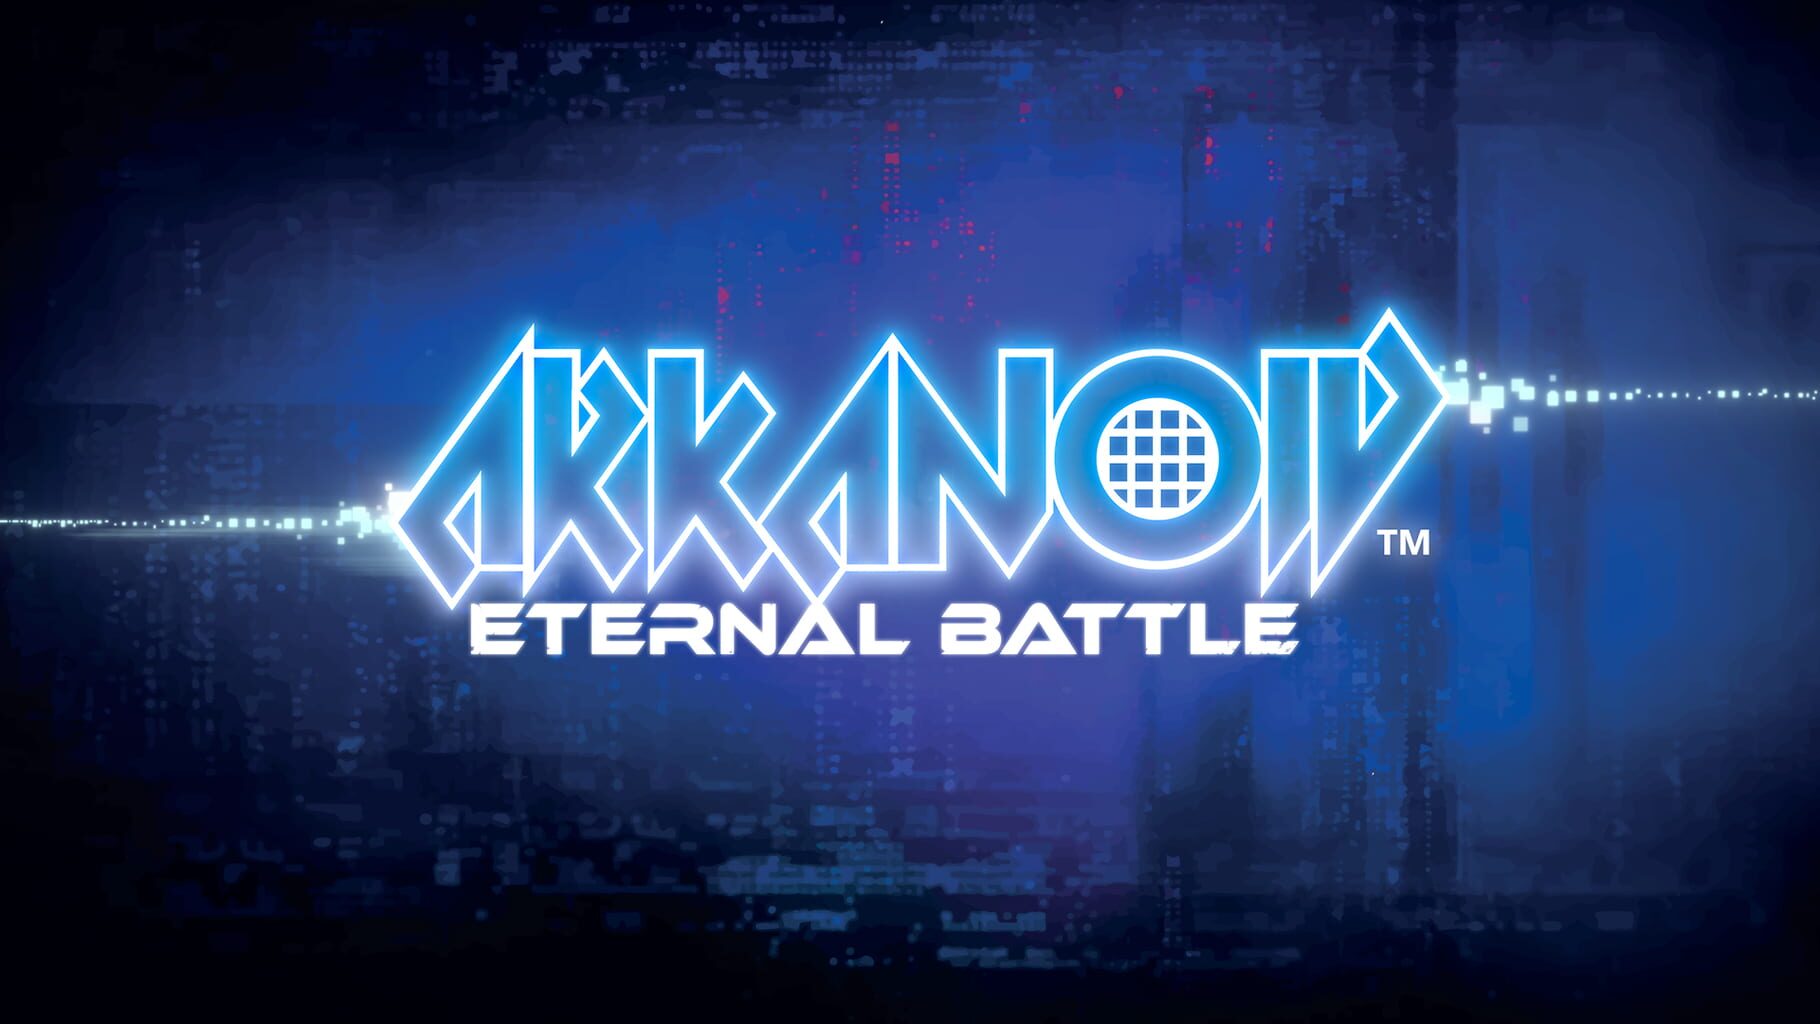 Arkanoid: Eternal Battle artwork